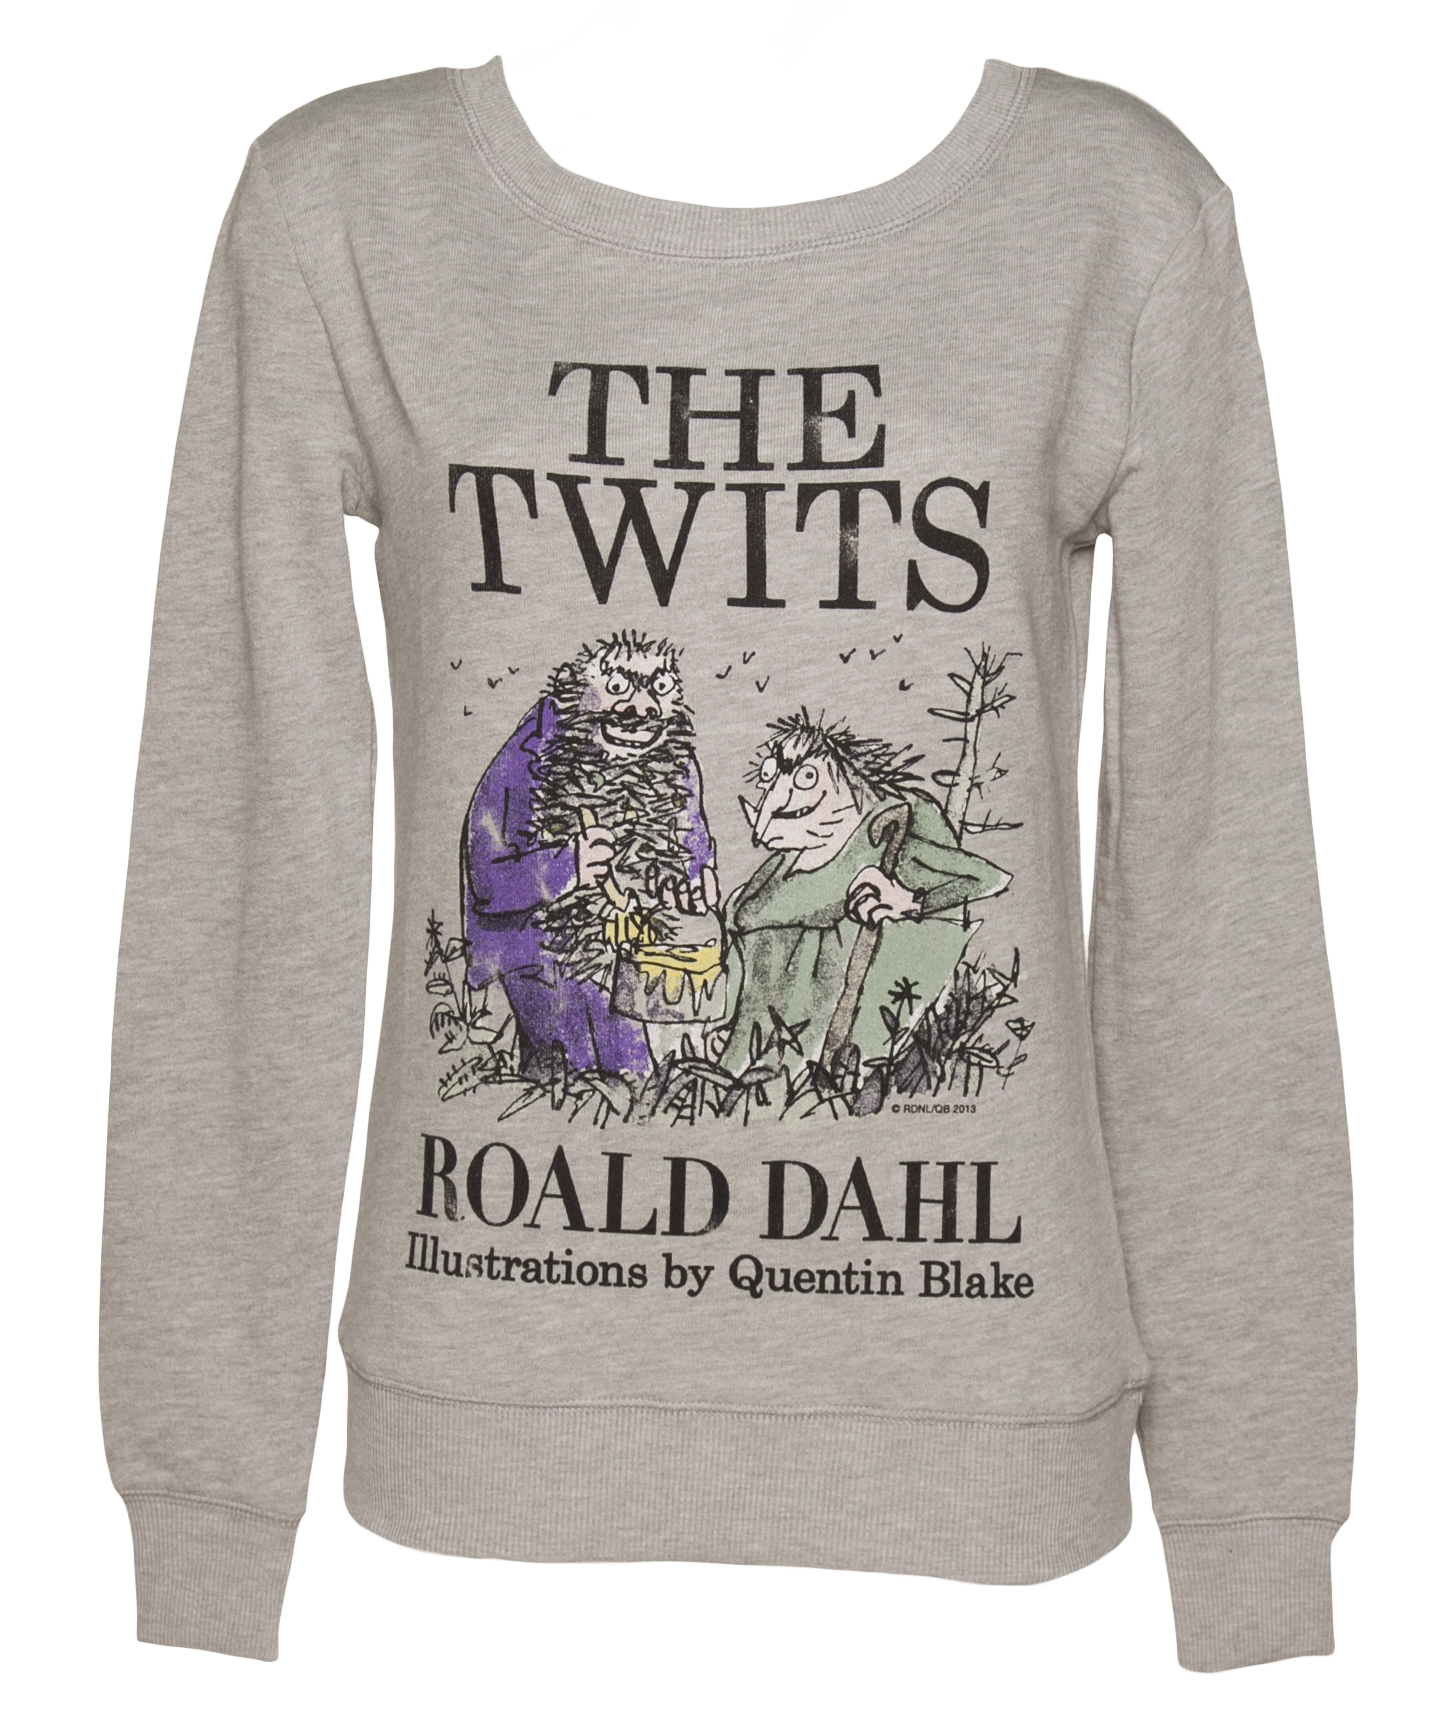 TruffleShuffle Ladies Roald Dahl The Twits Sweater